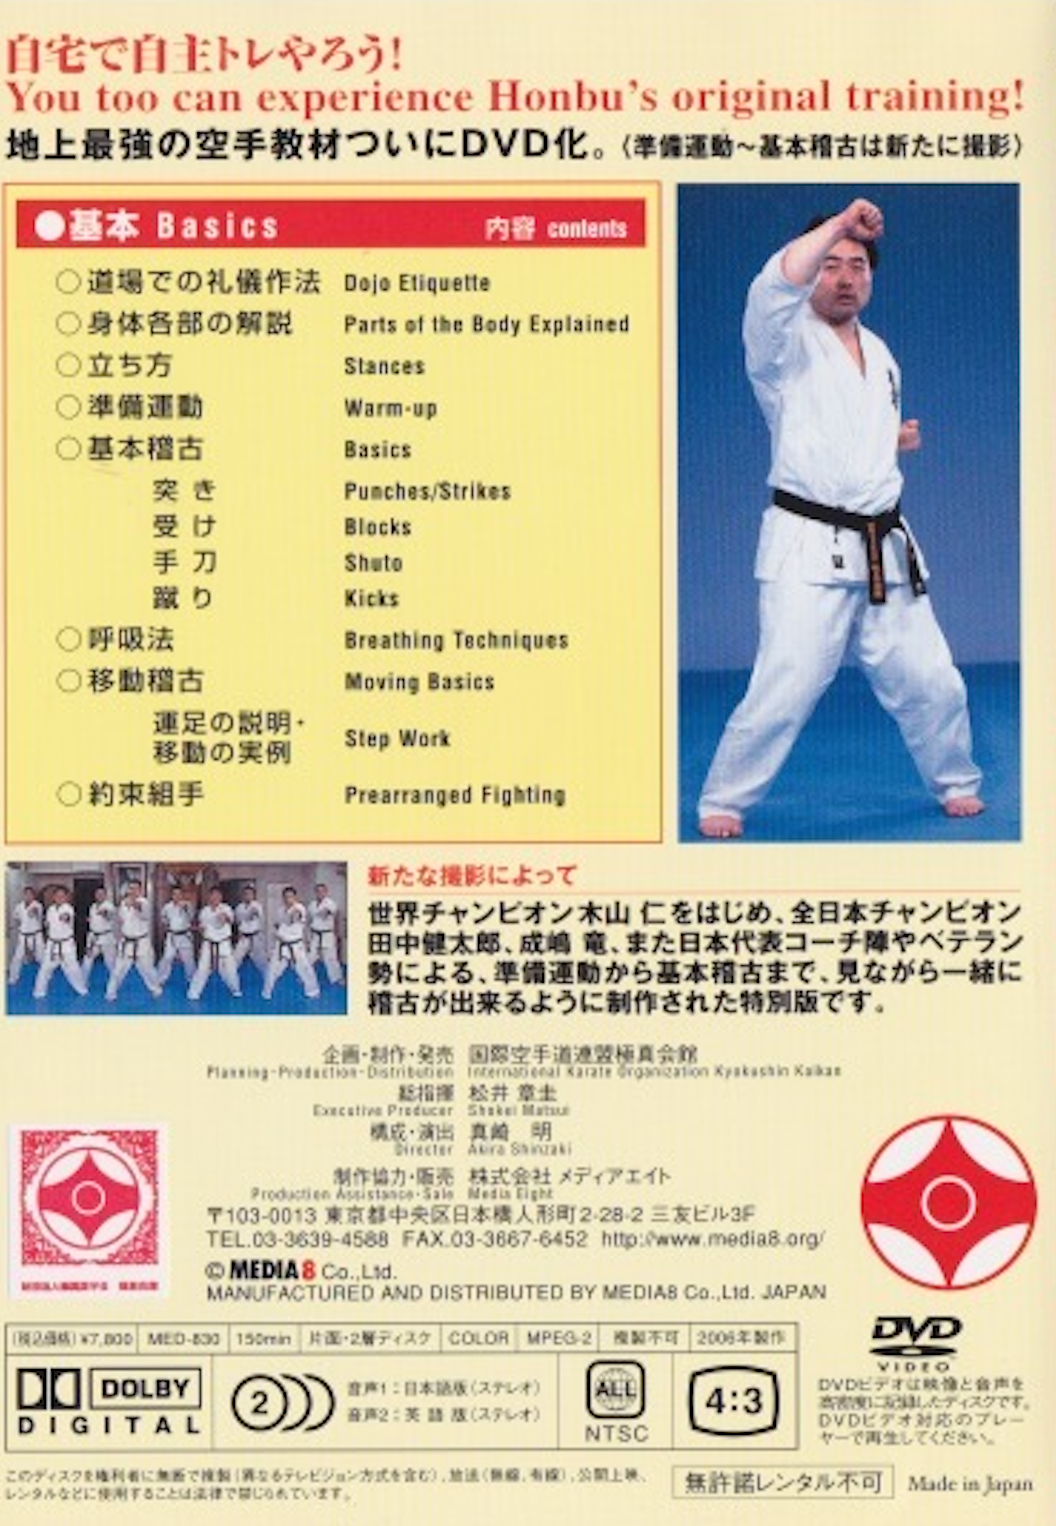 Kyokushin Karate Encyclopedia Vol 1 & 2: Basics DVD by Shokei Matsui